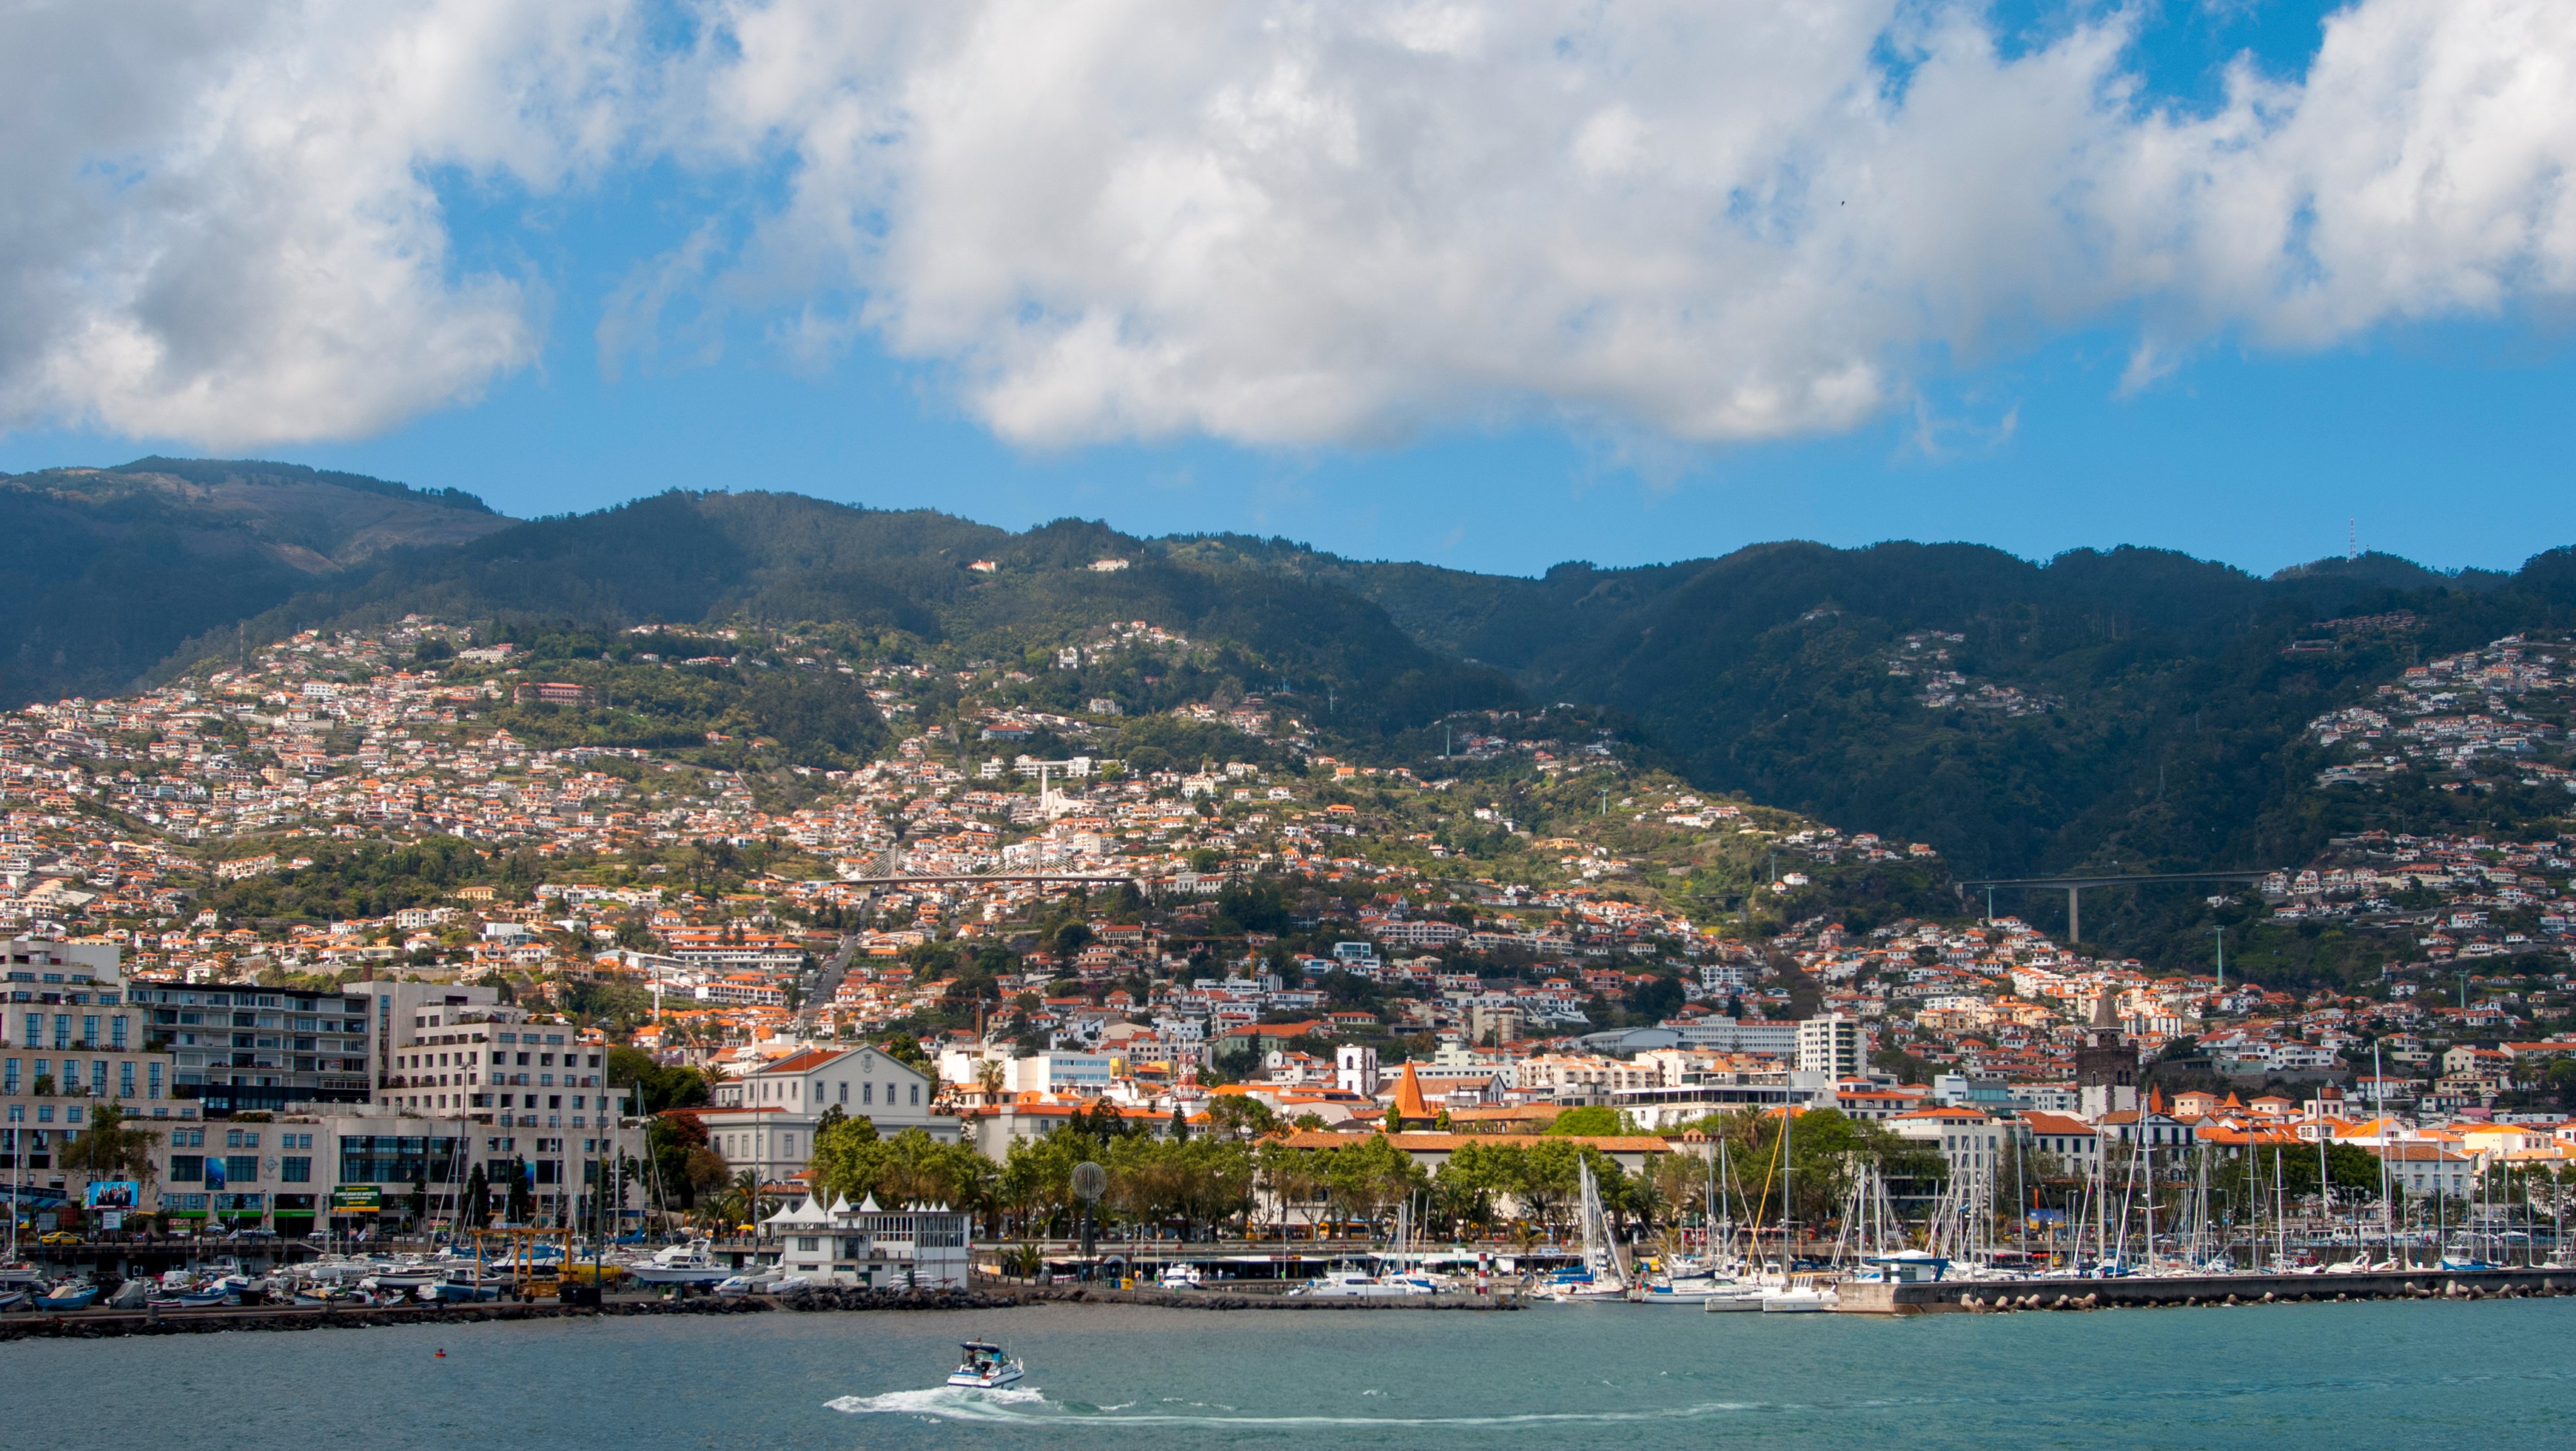 Vista Costal da cidade do Funchal, Madeira